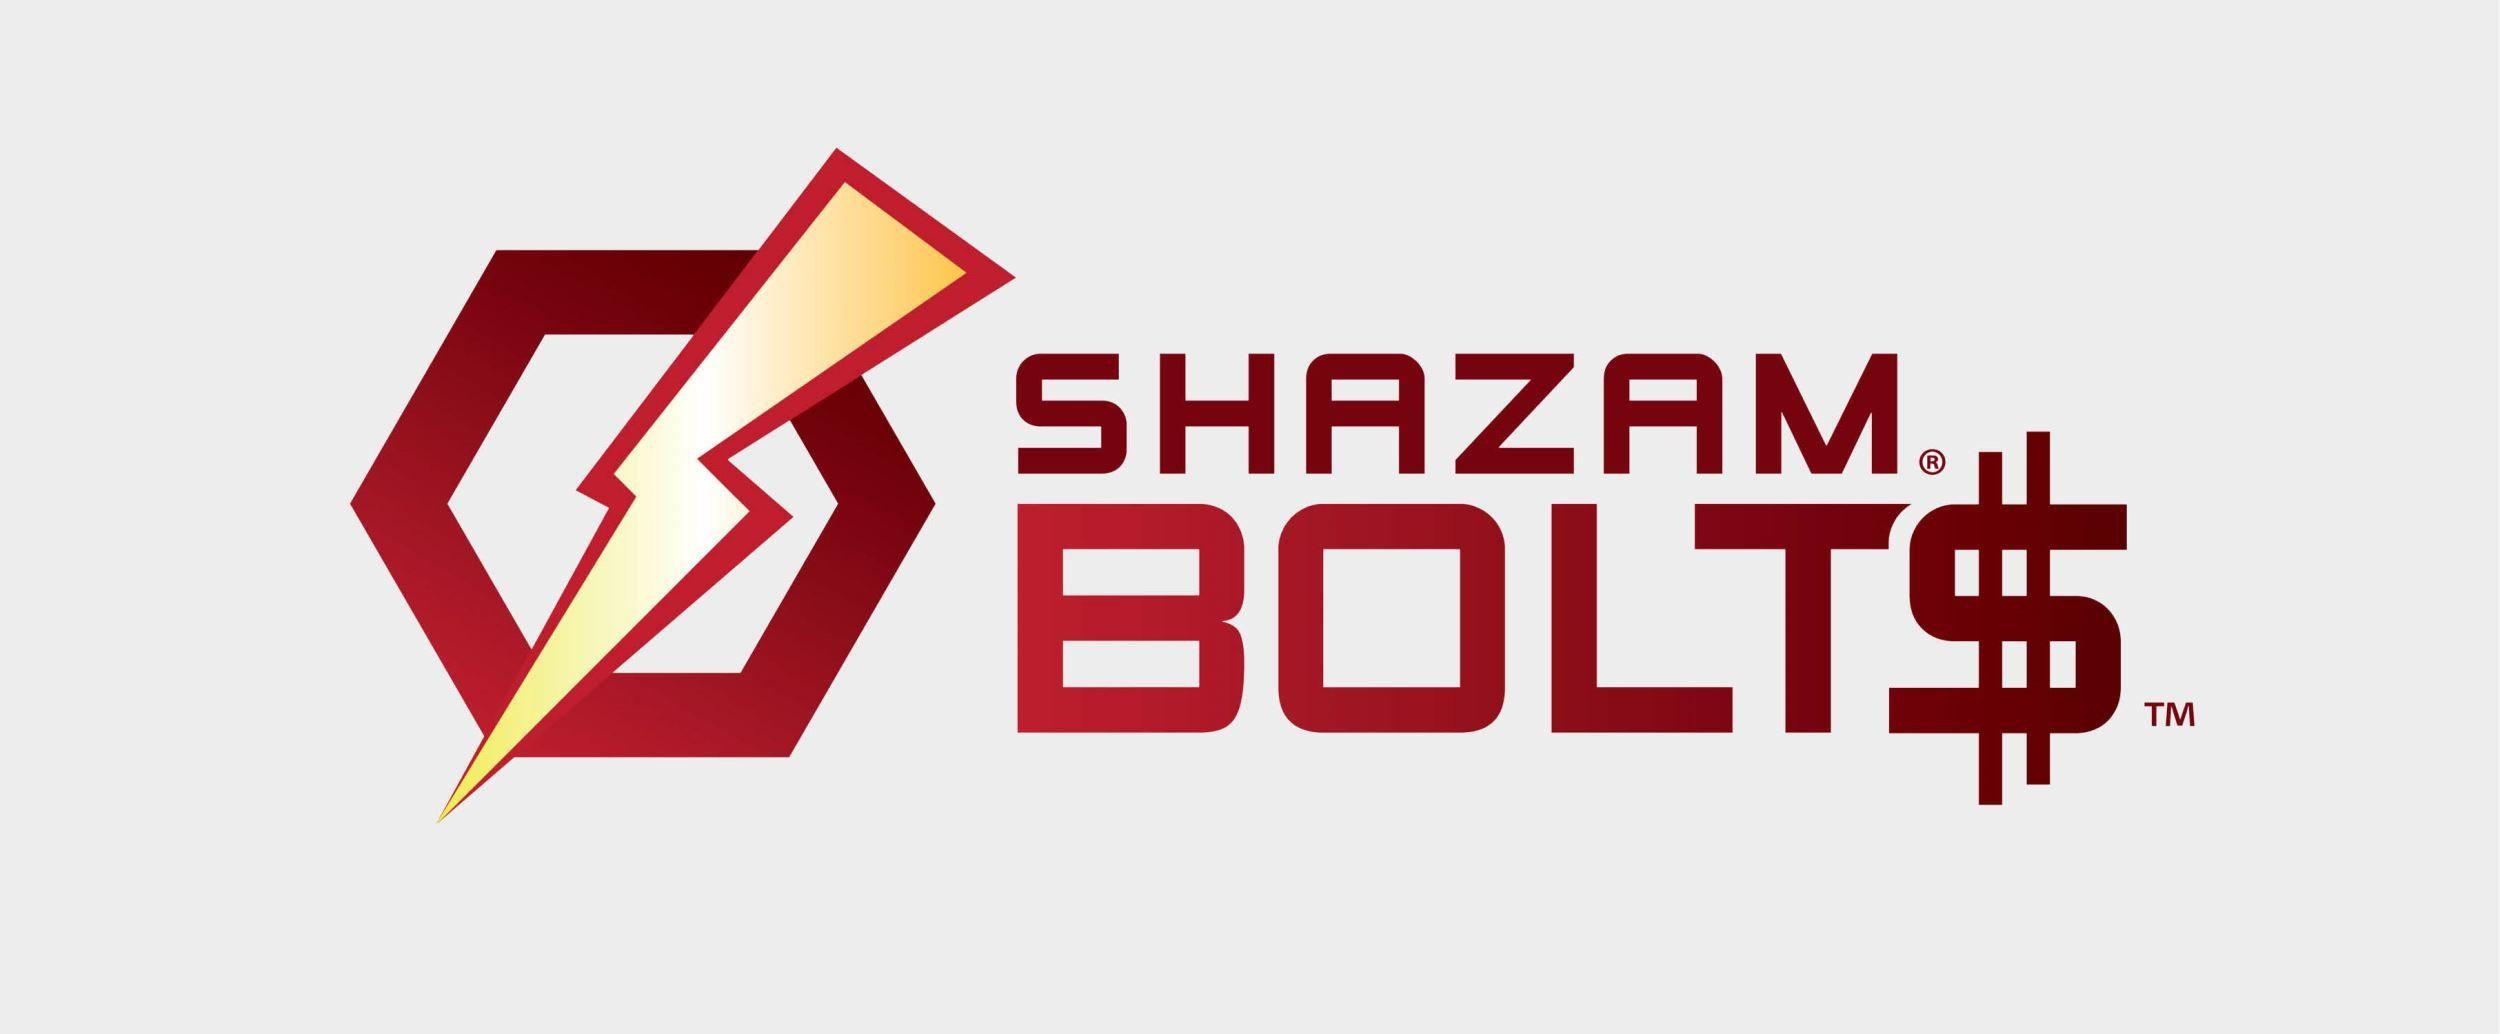 Bolts Logo - SHAZAM BOLT$ - Reliance State Bank